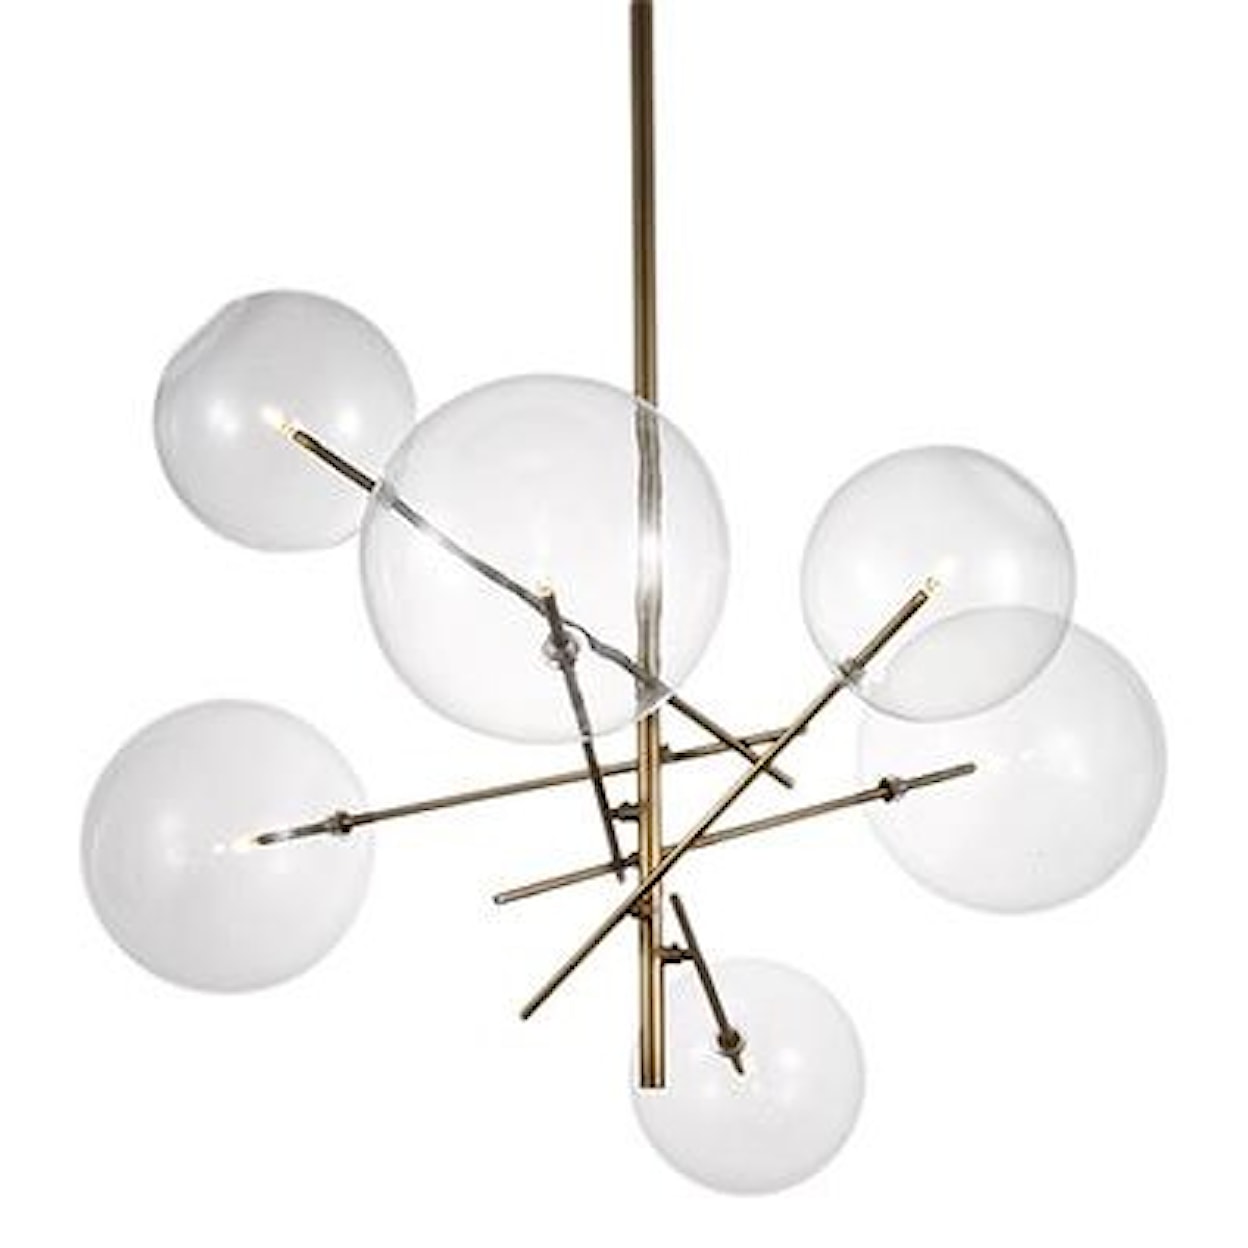 Dovetail Furniture Lamps and Lighting Leona Pendant Light